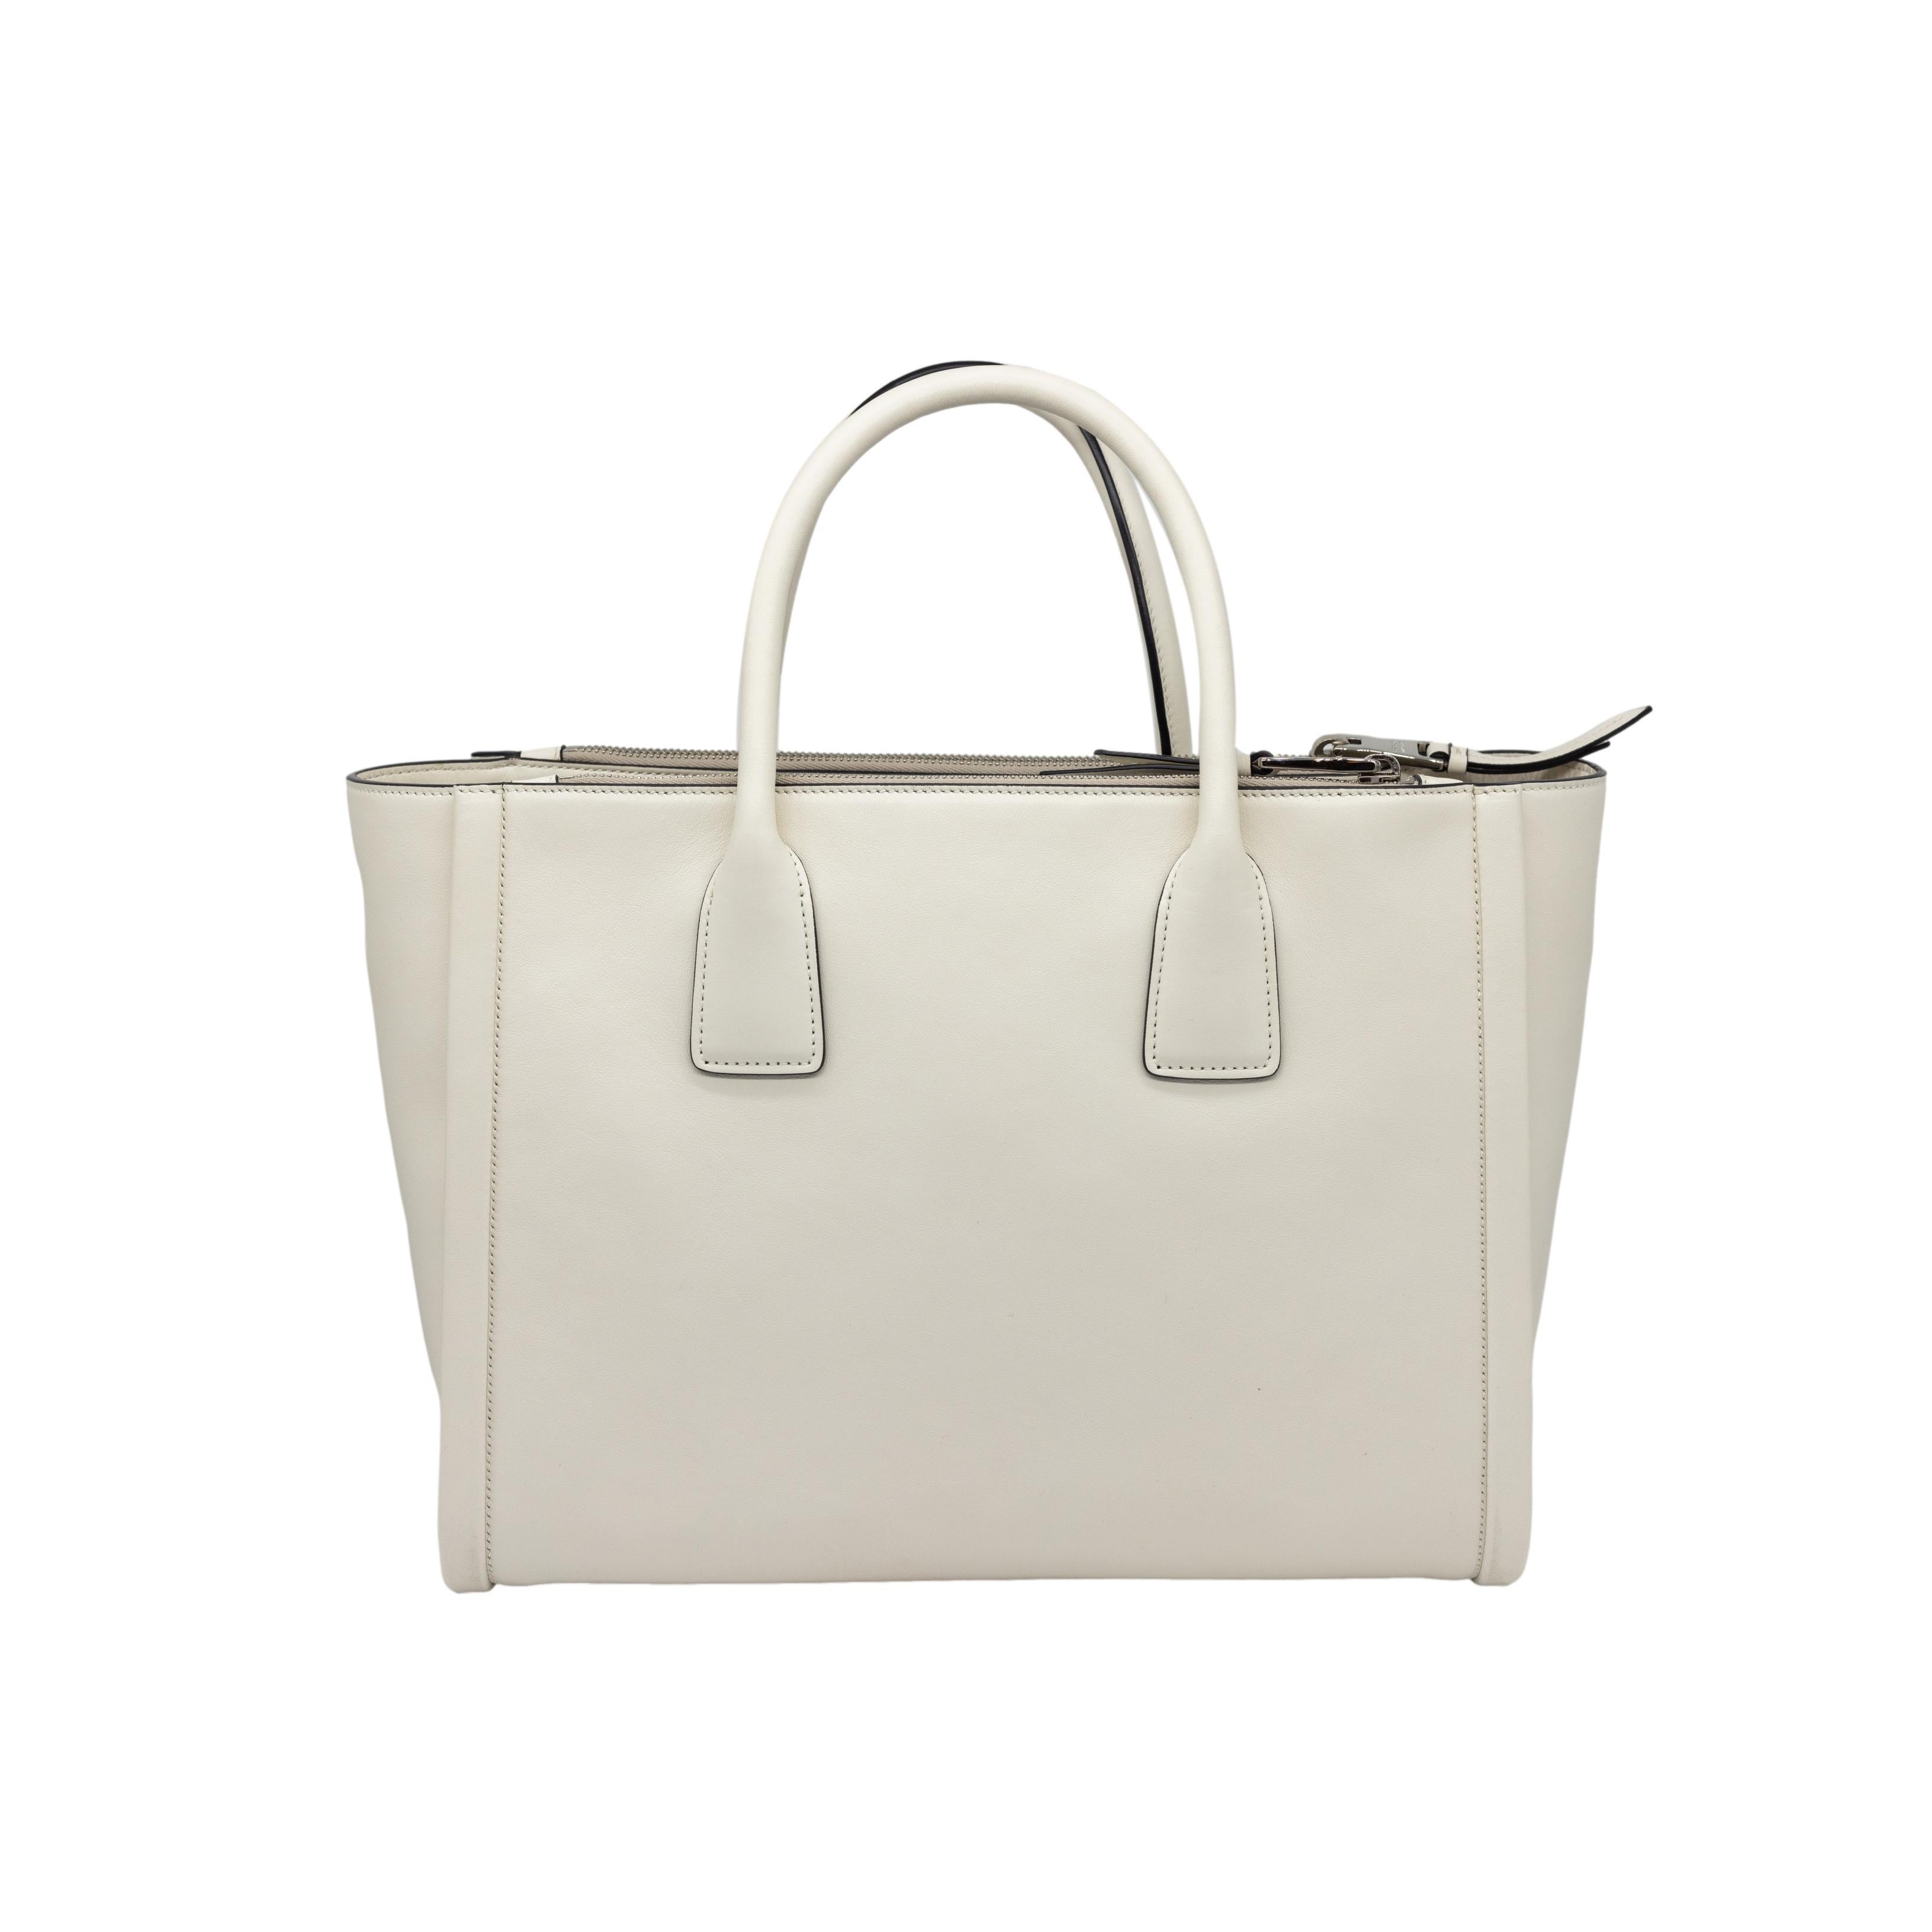 white handbags 2018